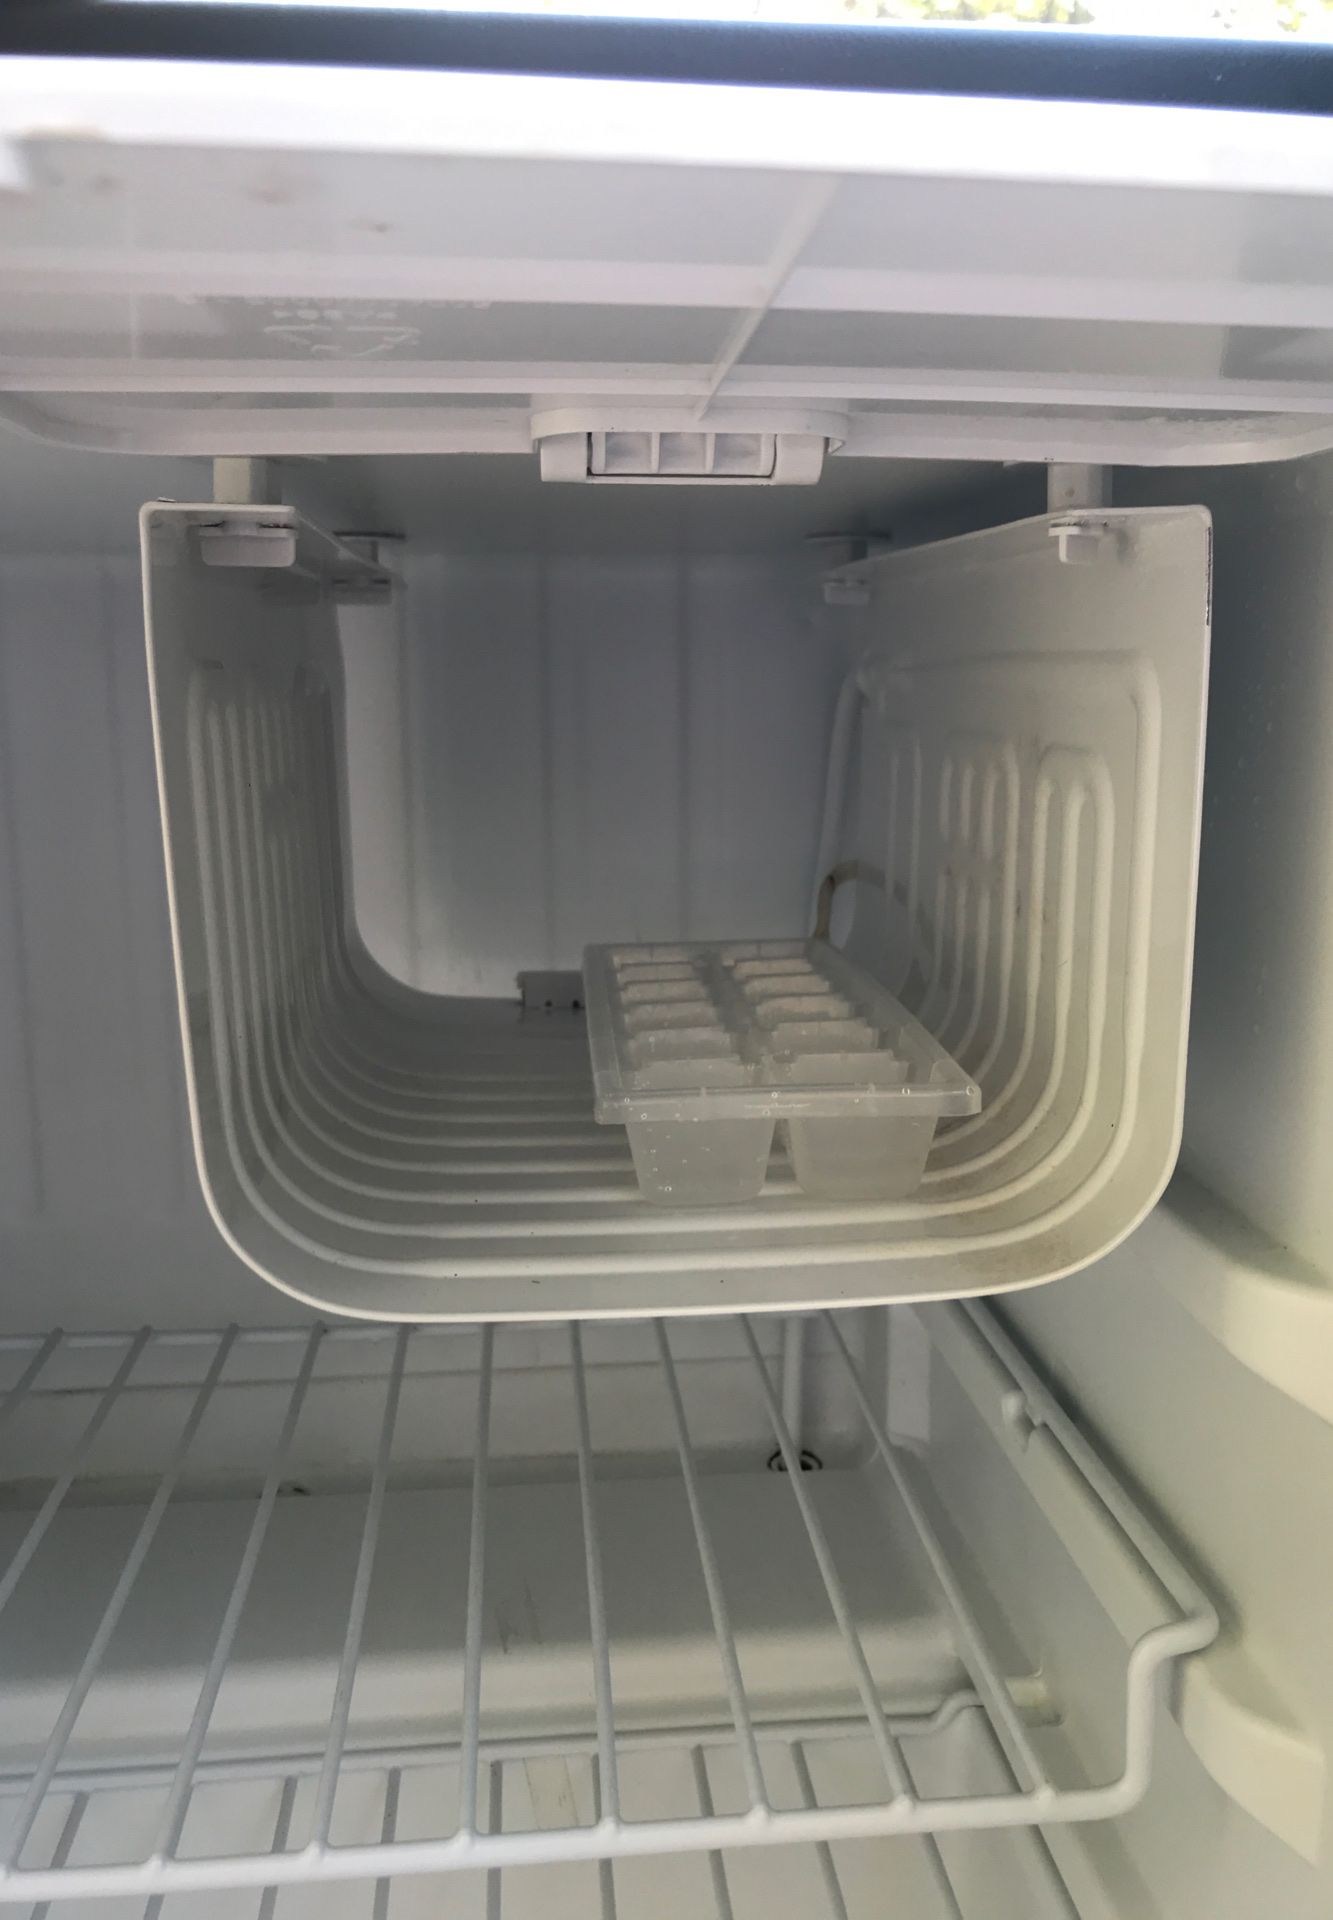 Galanz black mini fridge